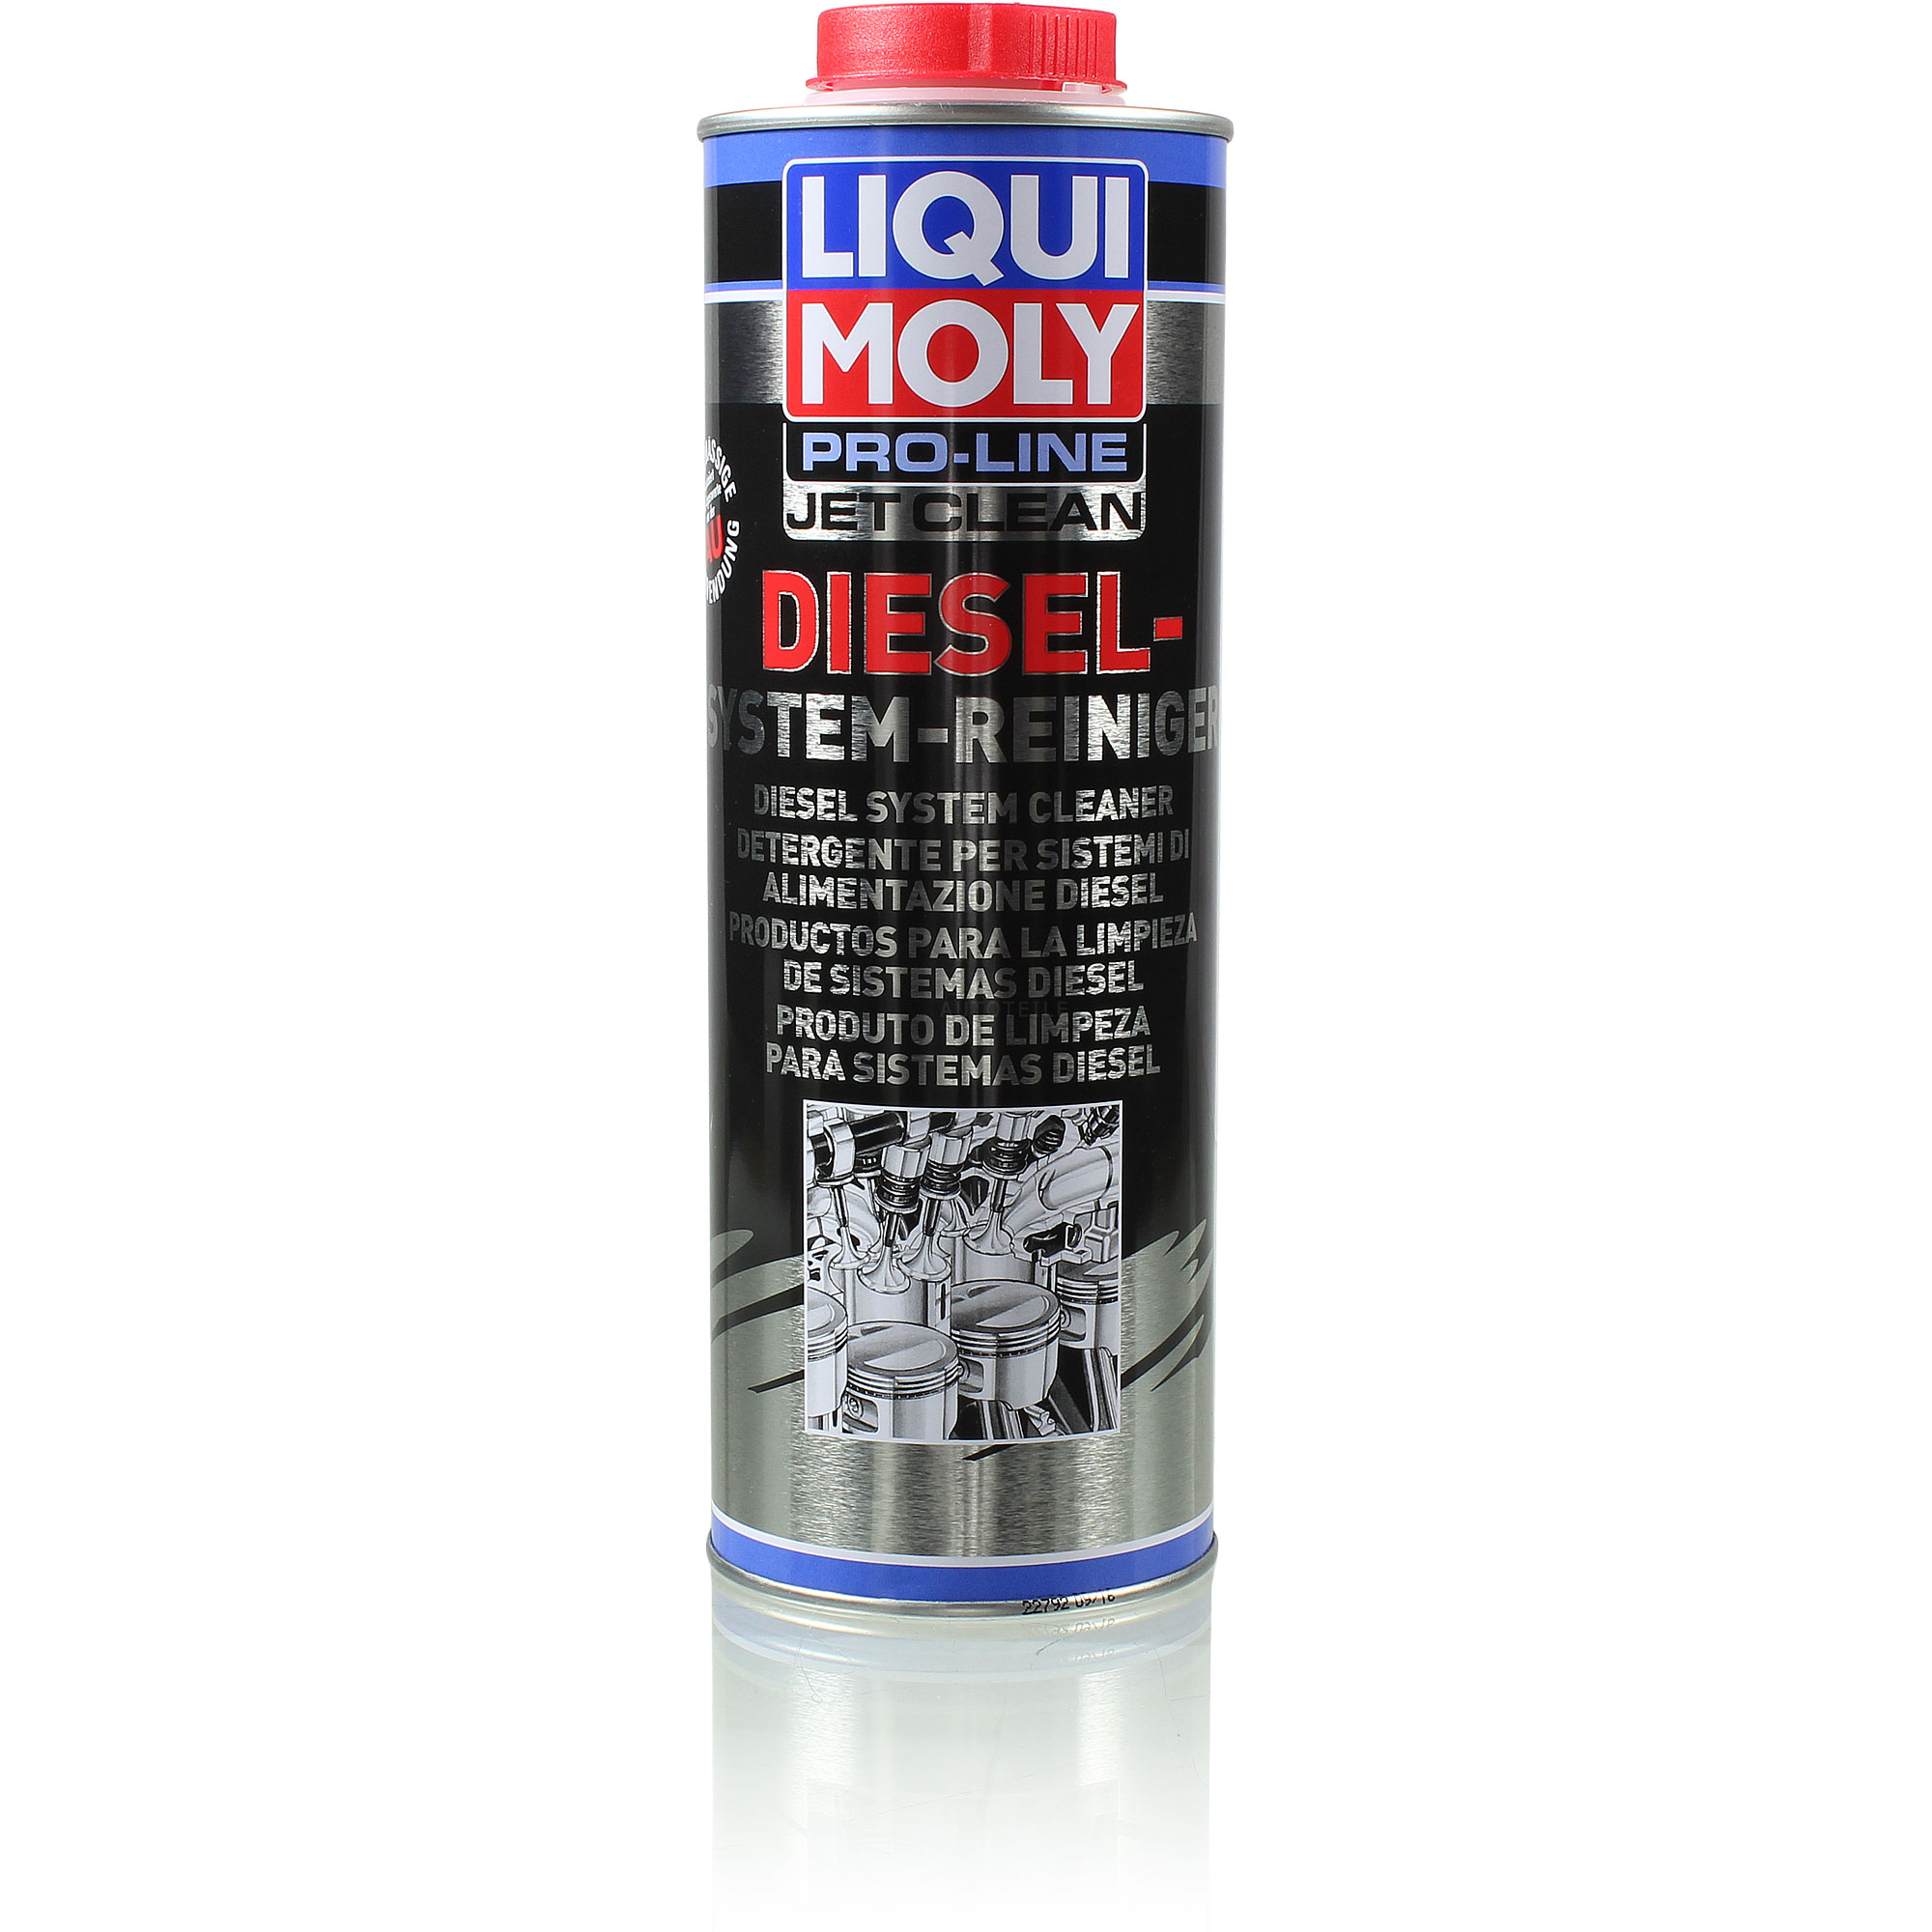  LIQUI MOLY 5149 Pro Line JetClean Diesel System Reiniger Dose Blech 1L